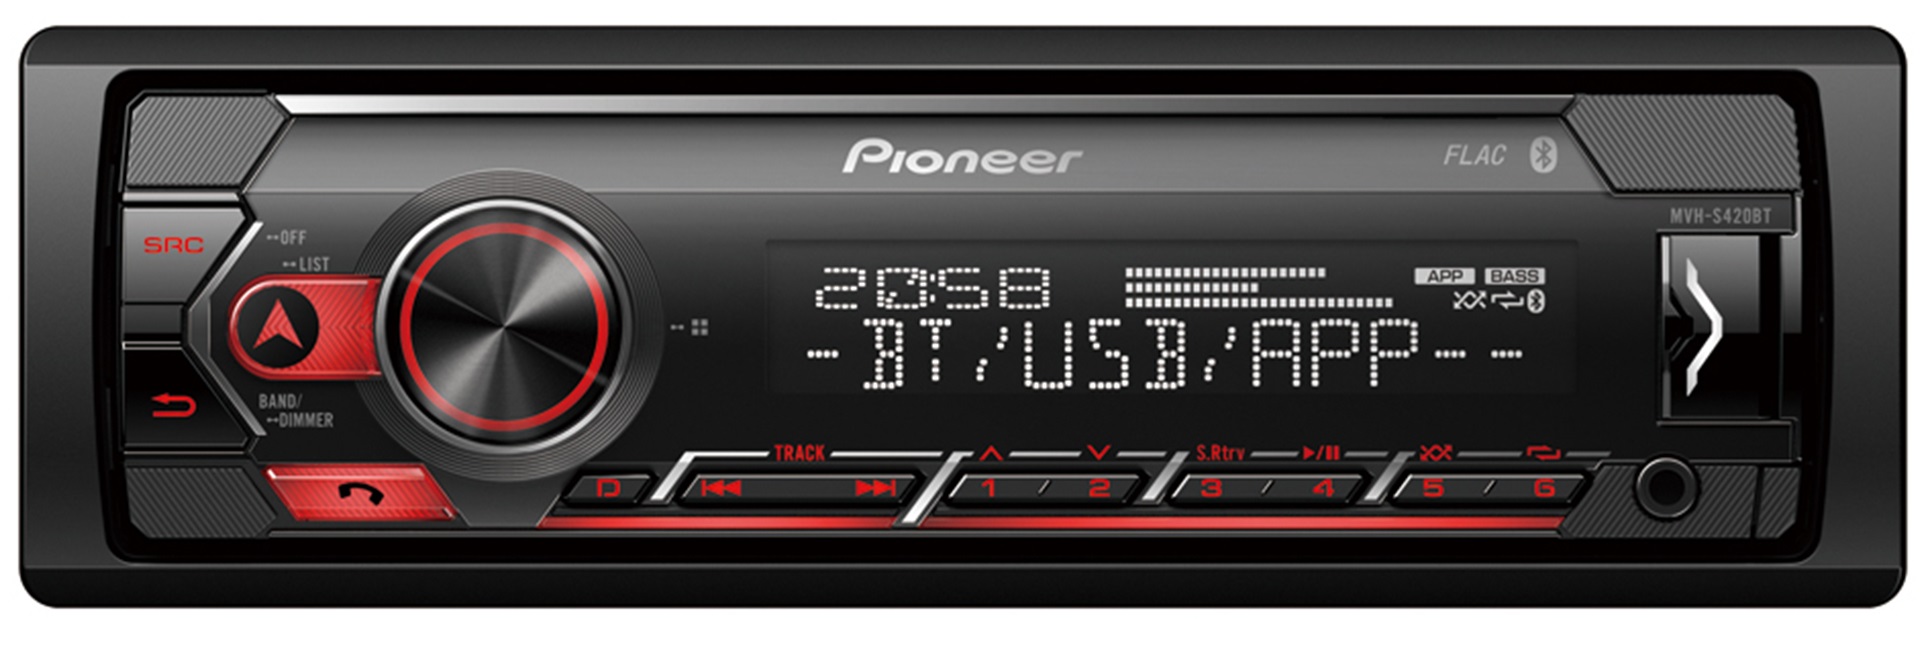 Billede af Pioneer MVH-S420BT Bilradio m. Bluetooth/Trådløs Telefoni